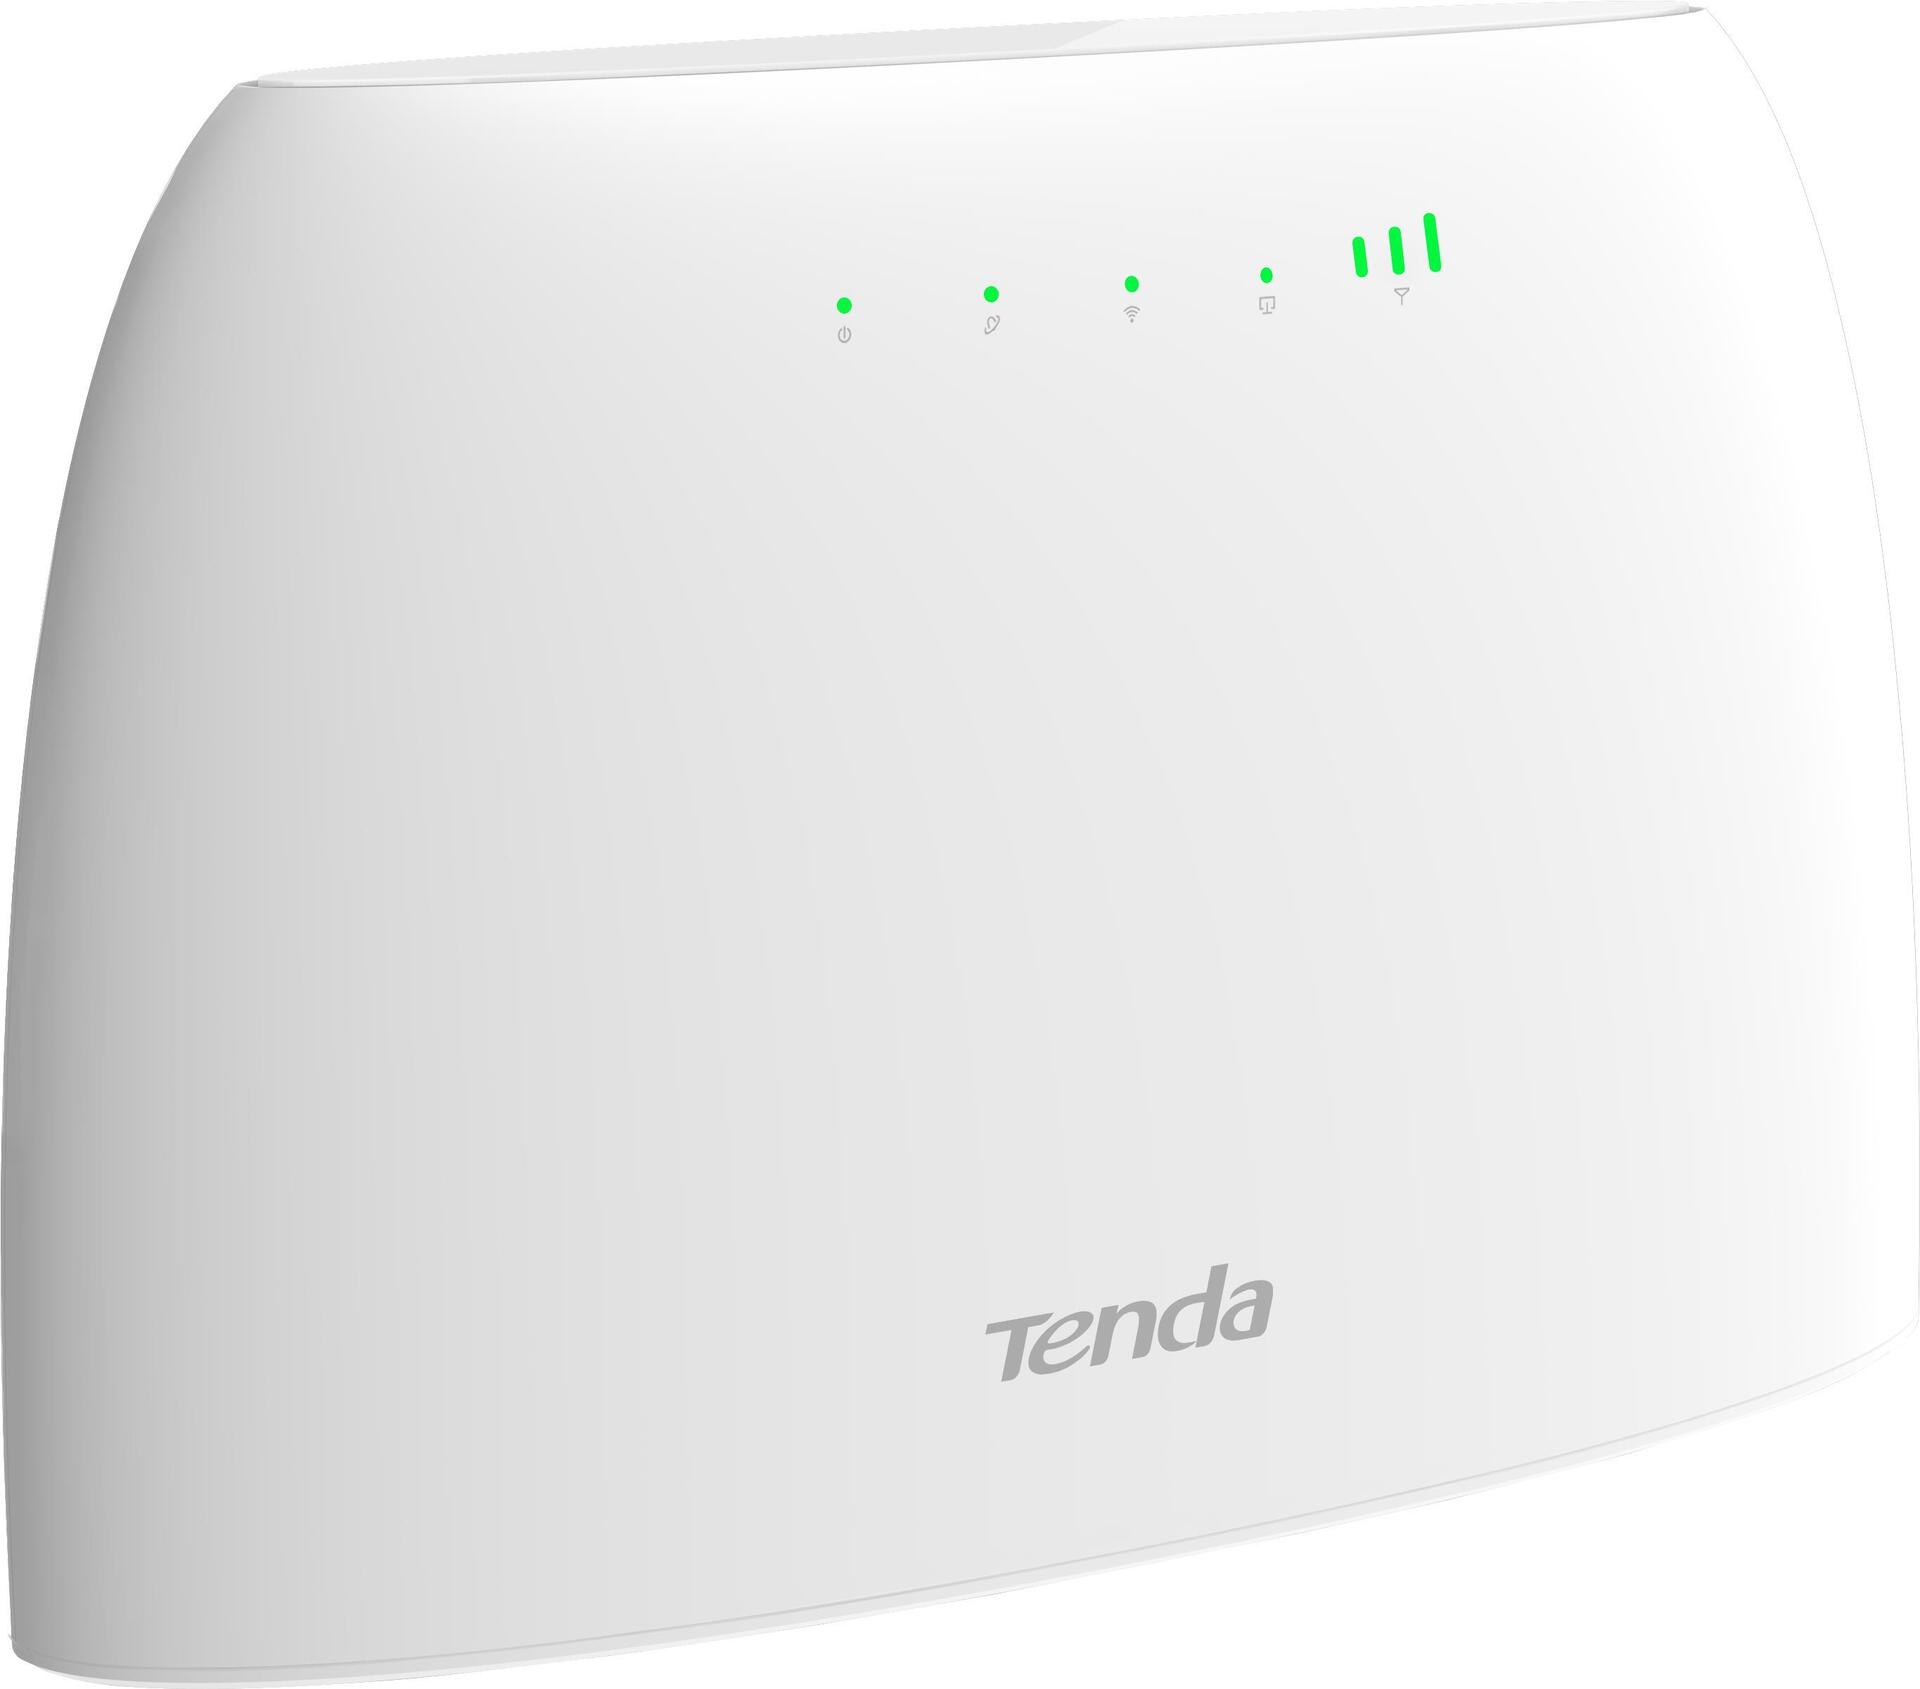 Tenda N300 WLAN Router Schnelles Ethernet Einzelband (2,4GHz) 3G 4G Weiß (4G03)  - Onlineshop JACOB Elektronik